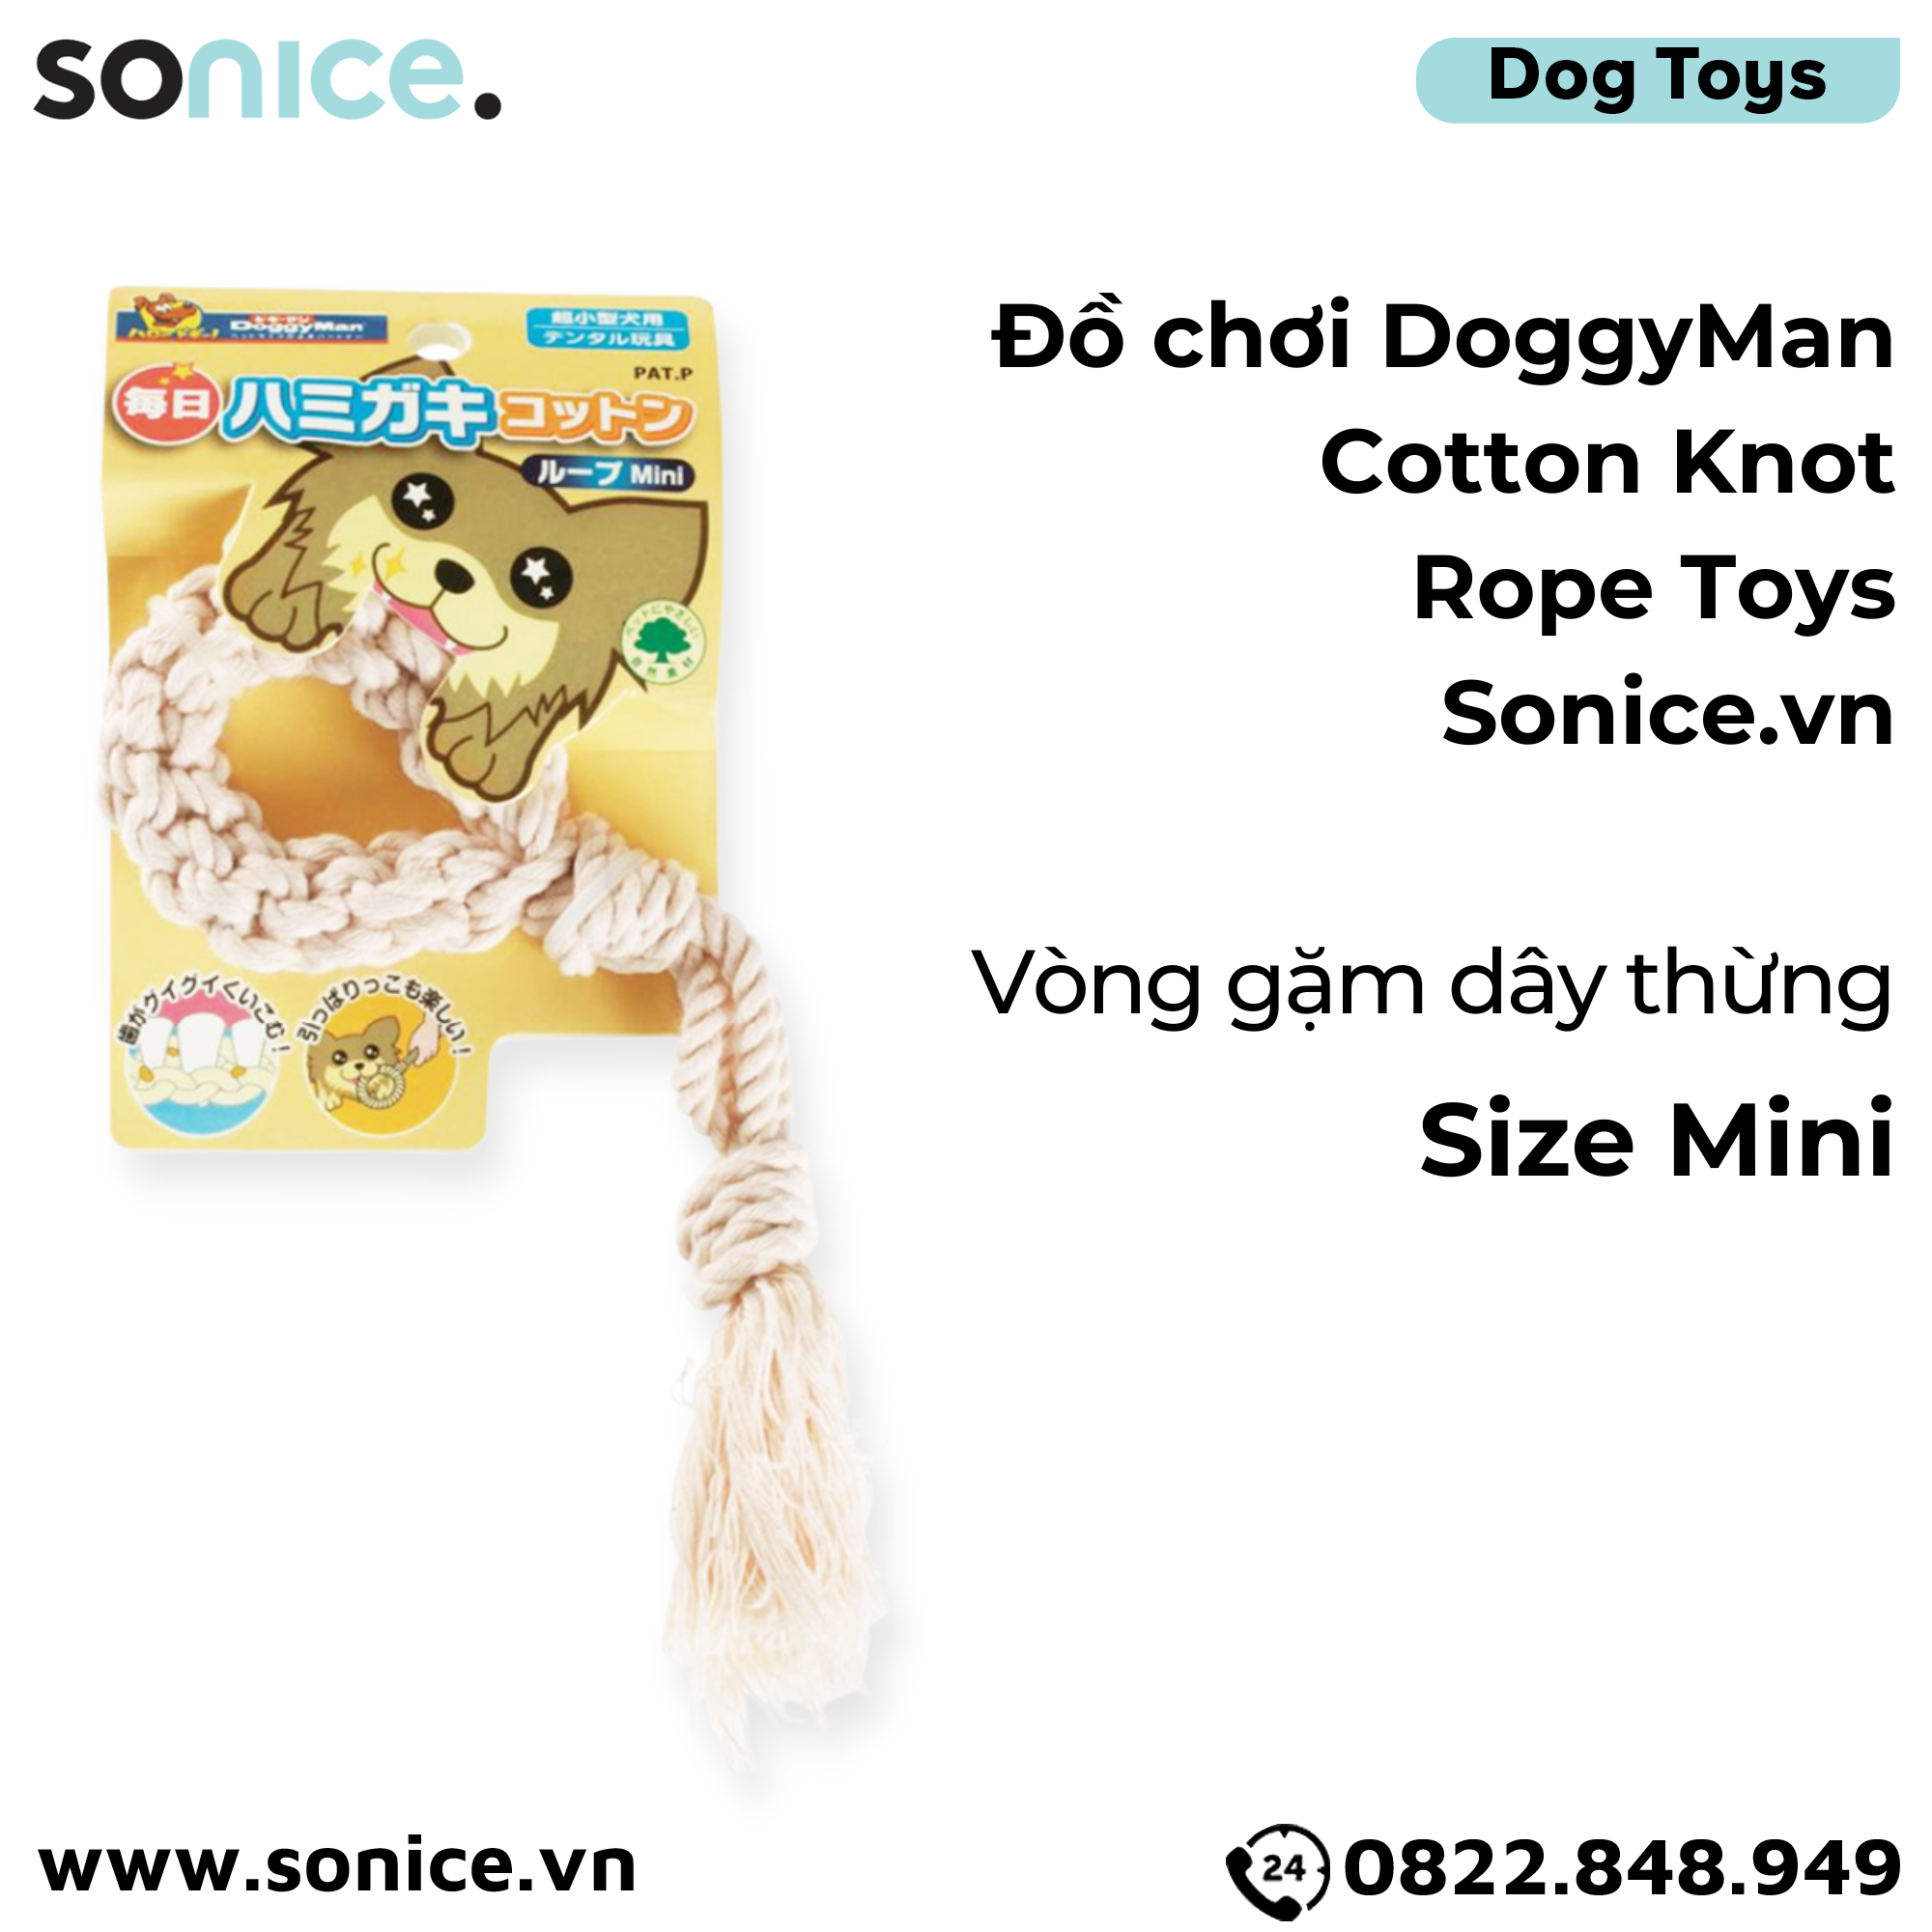  Đồ chơi DoggyMan Cotton Knot Rope Toys size Mini - Vòng gặm dây thừng SONICE. 